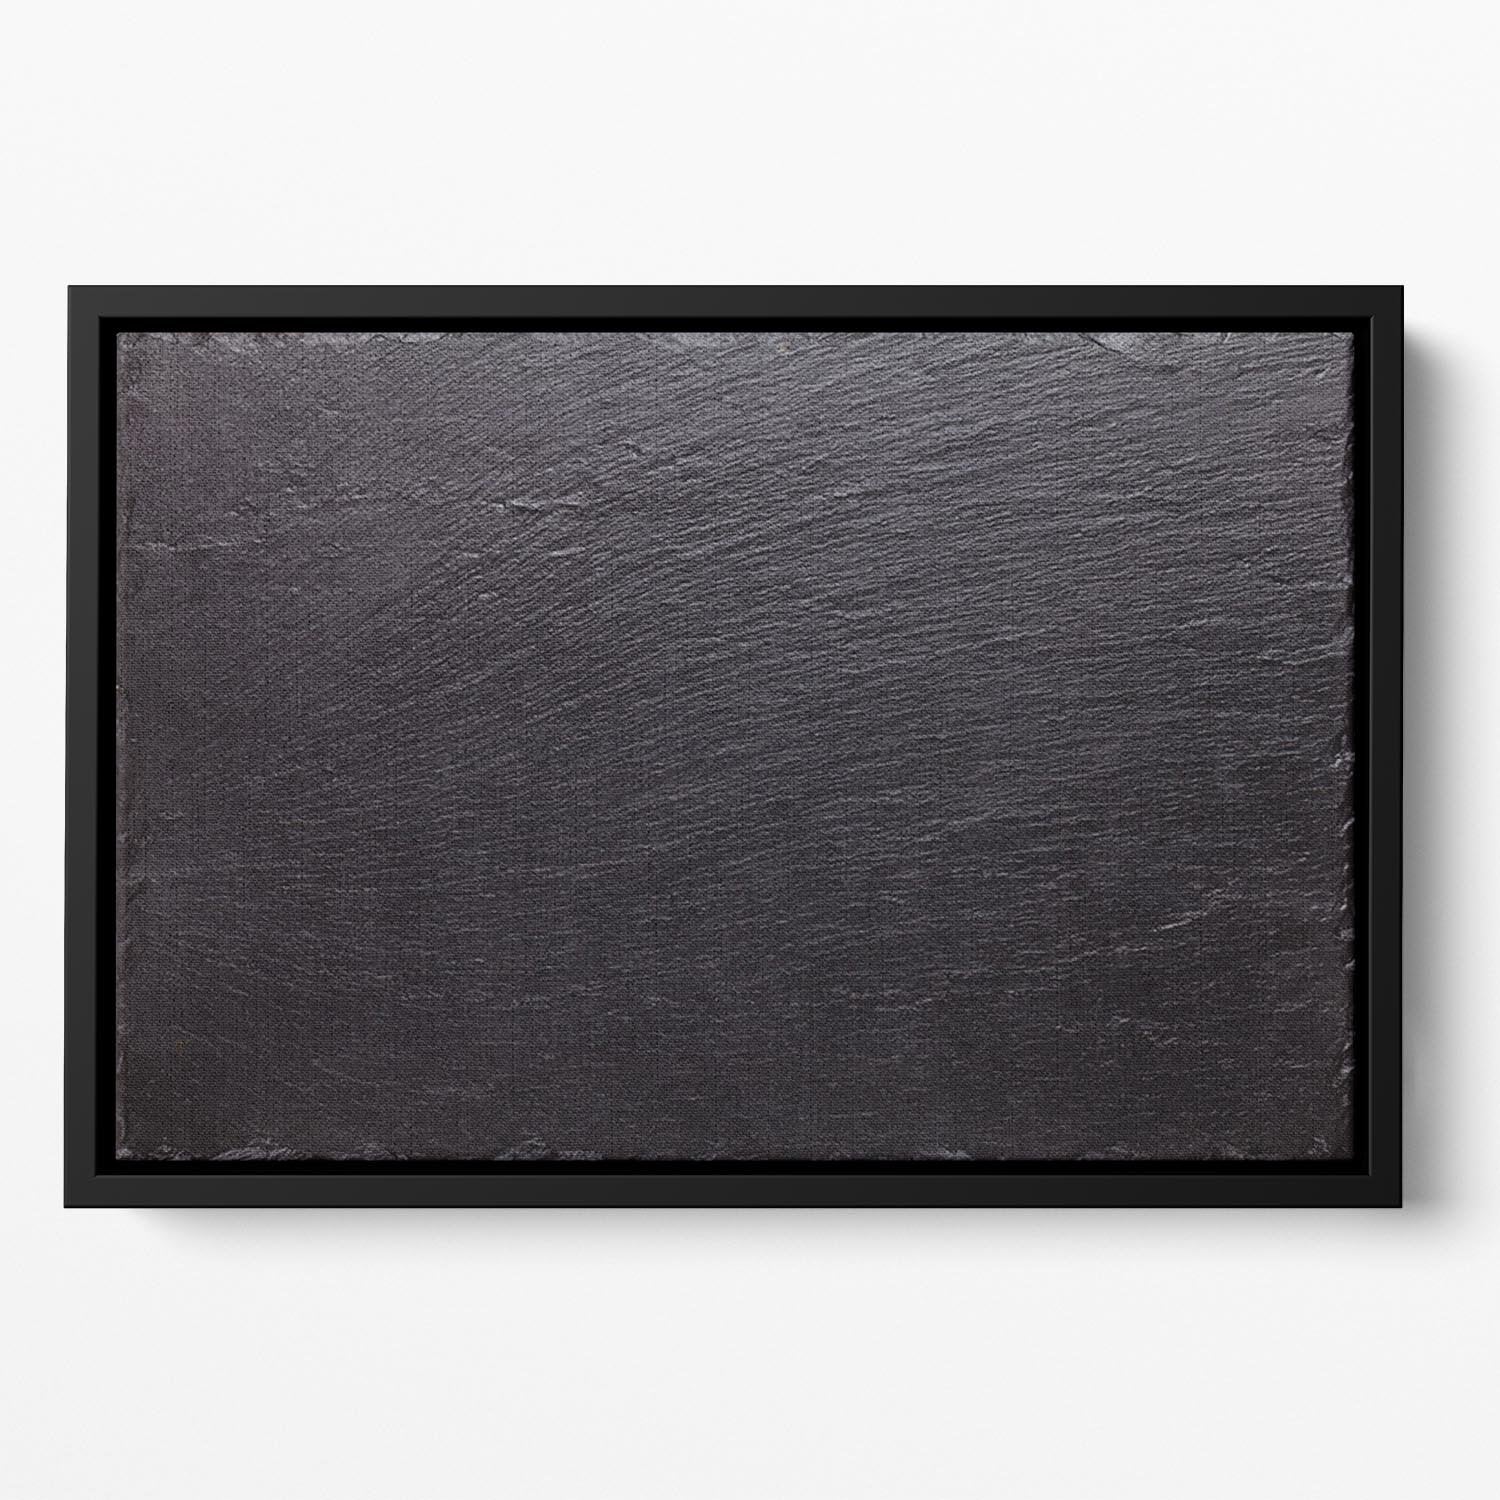 Black slate stone Floating Framed Canvas - Canvas Art Rocks - 2